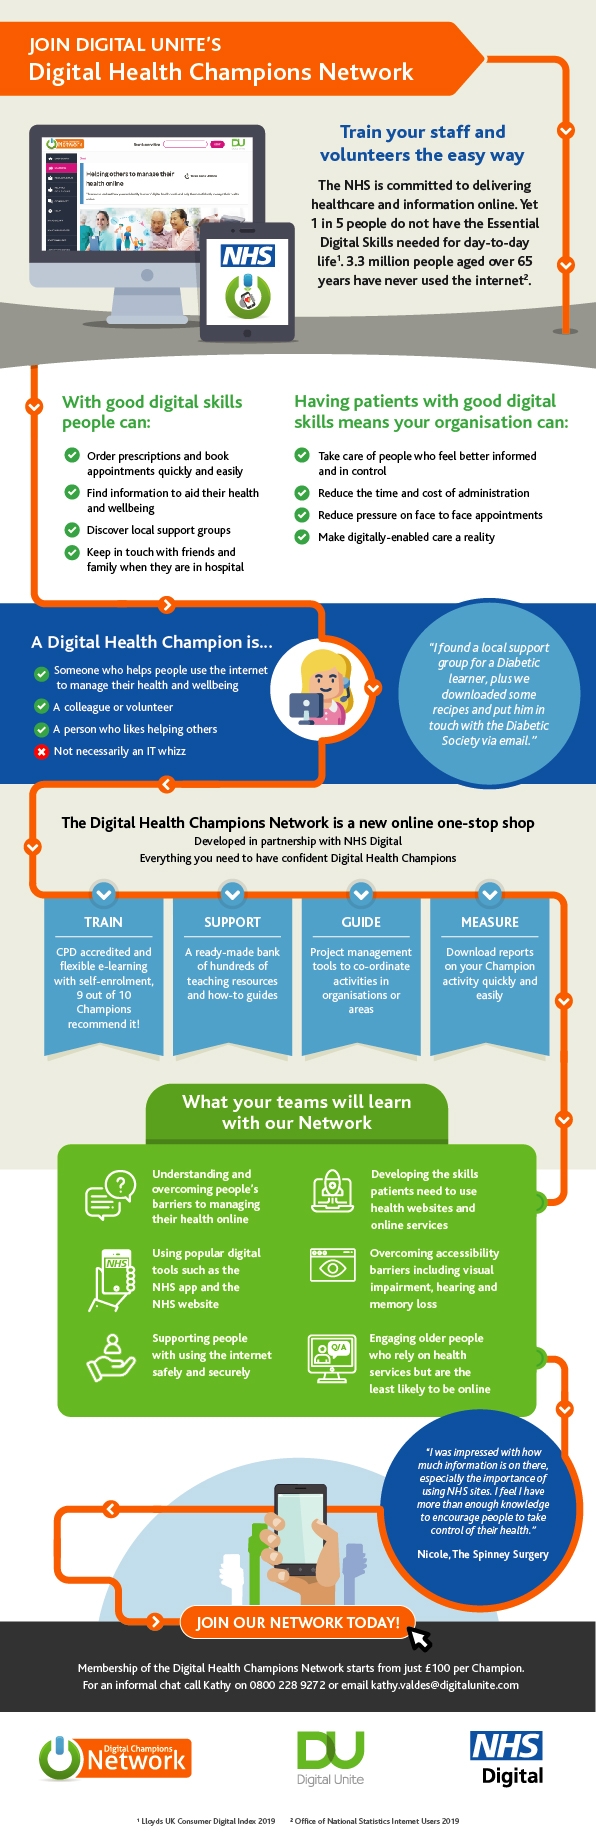 About Digital Unite's Digital Health Champions Network